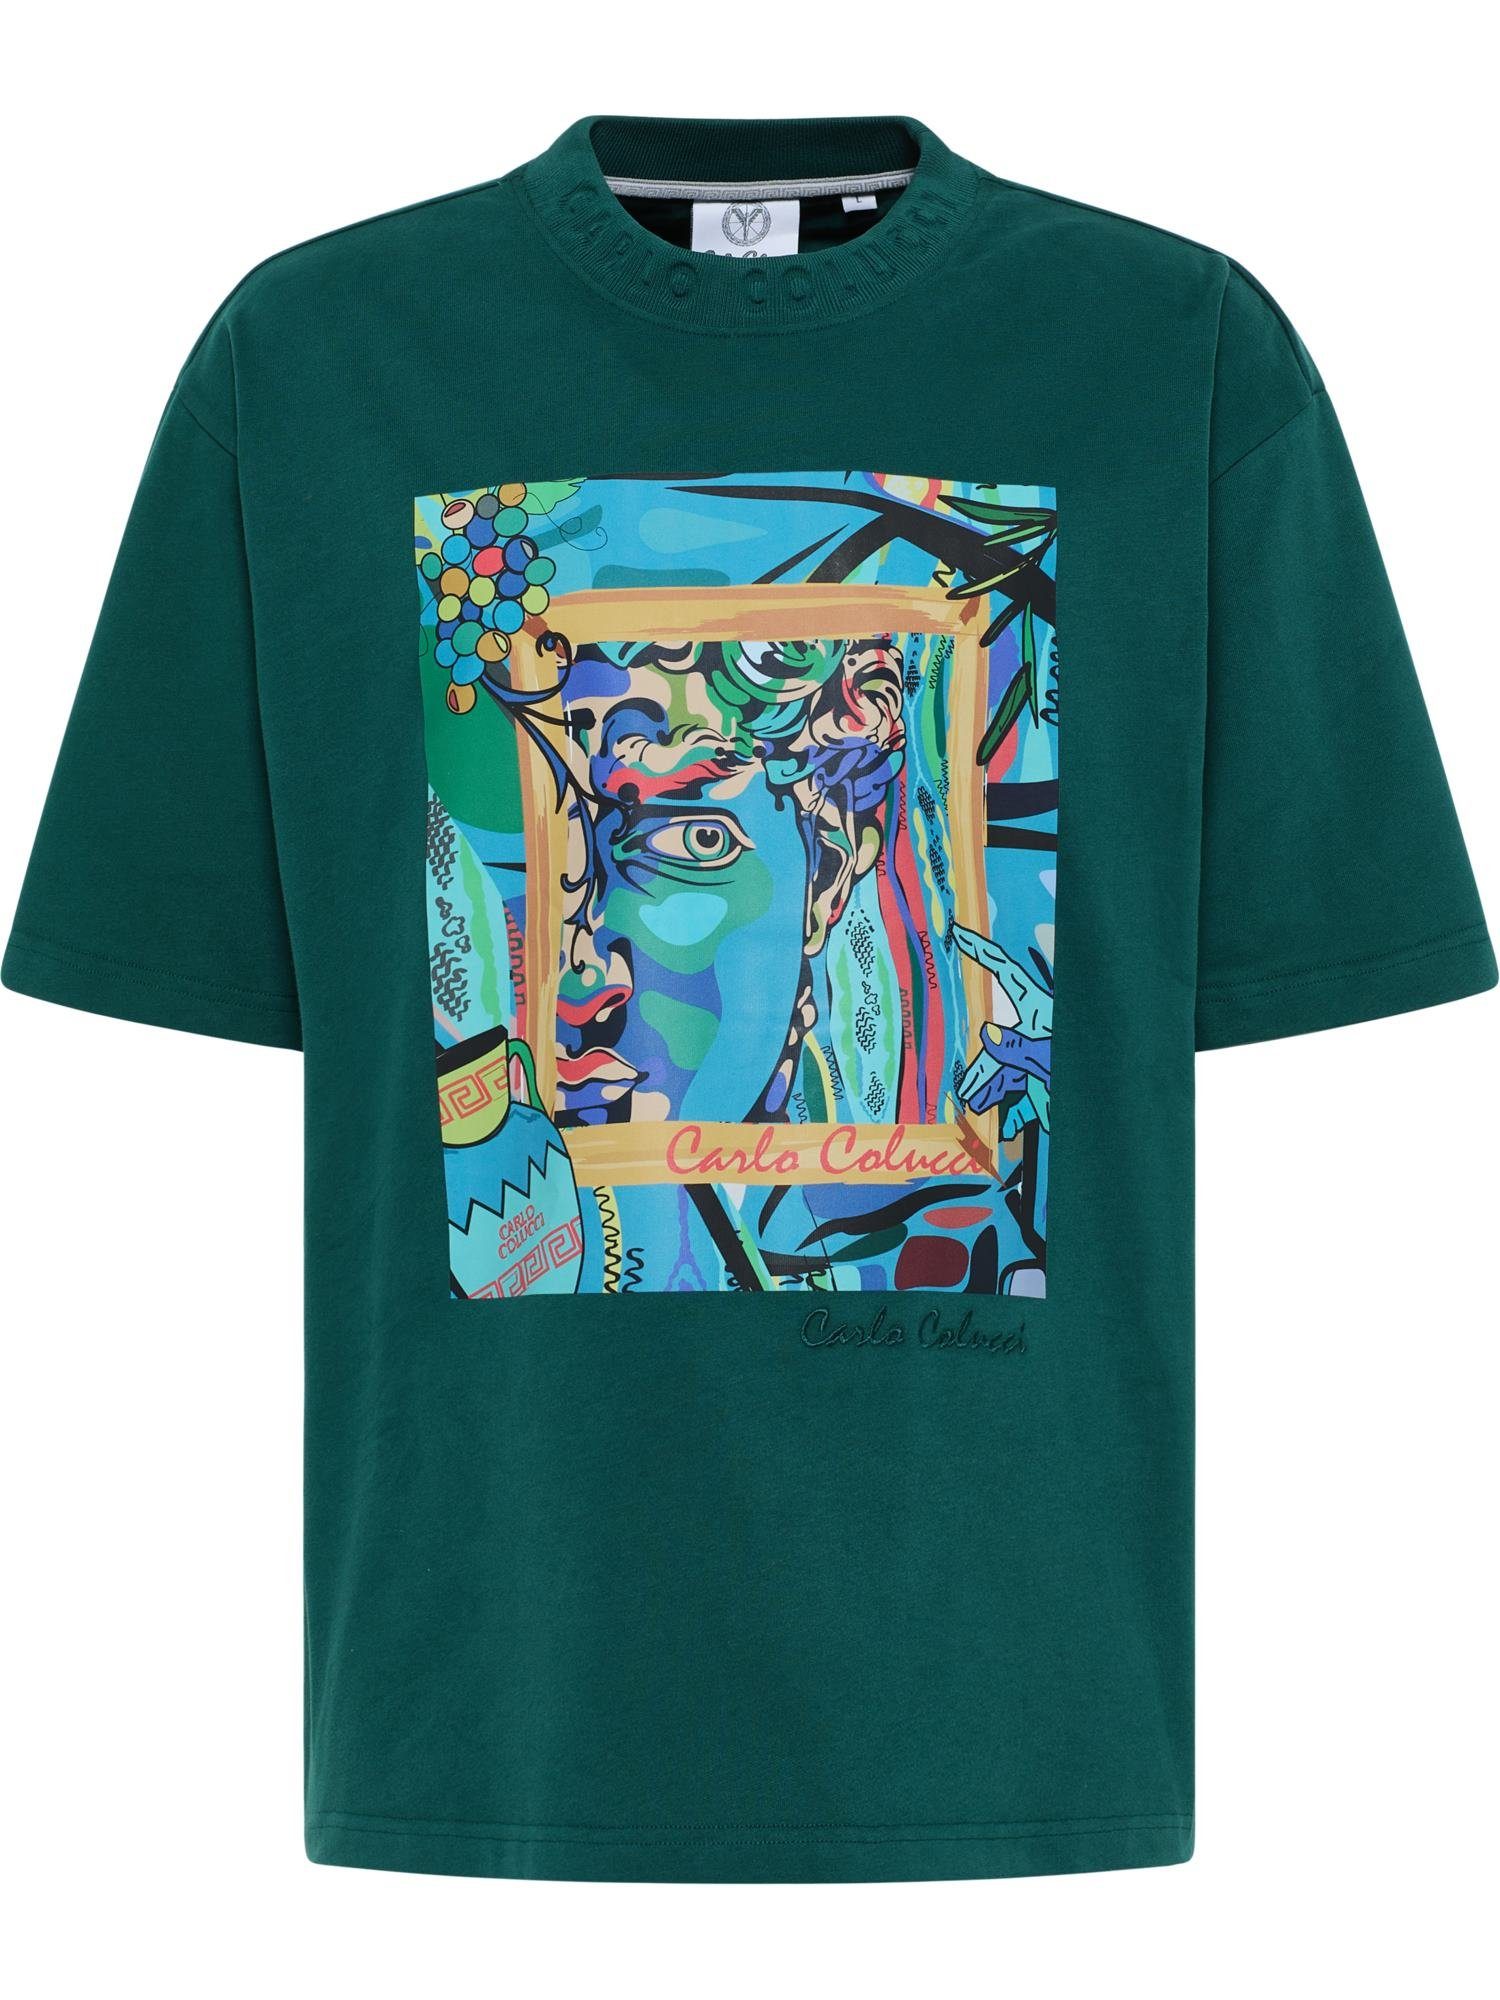 COLUCCI Tommaso T-Shirt De / Mehrfarbig Grün CARLO